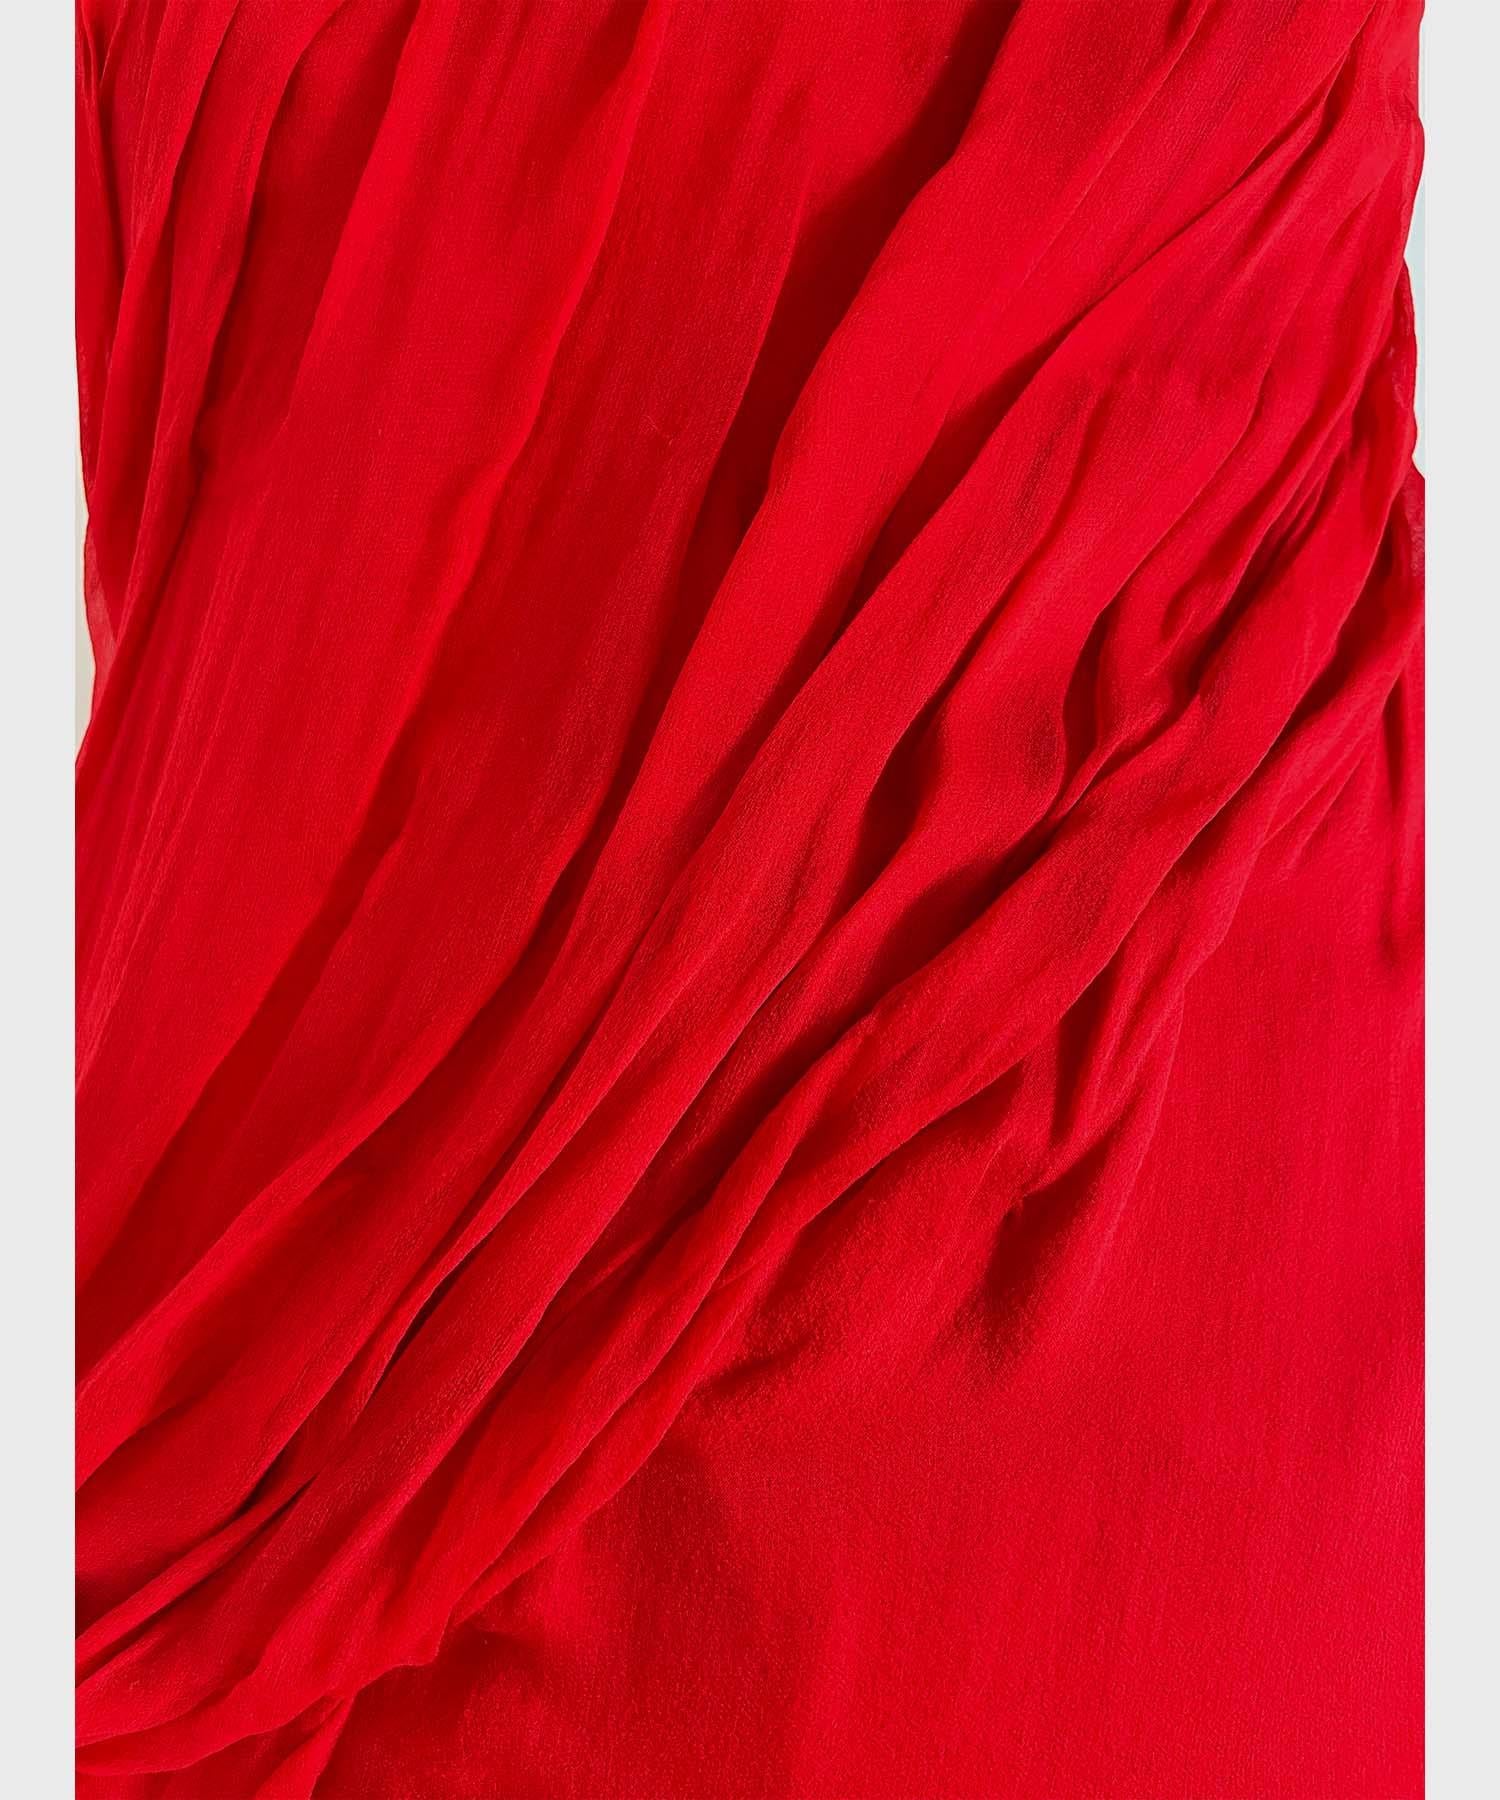 Atelier Versace Red Silk Chiffon Gown Patron Original For Sale 6